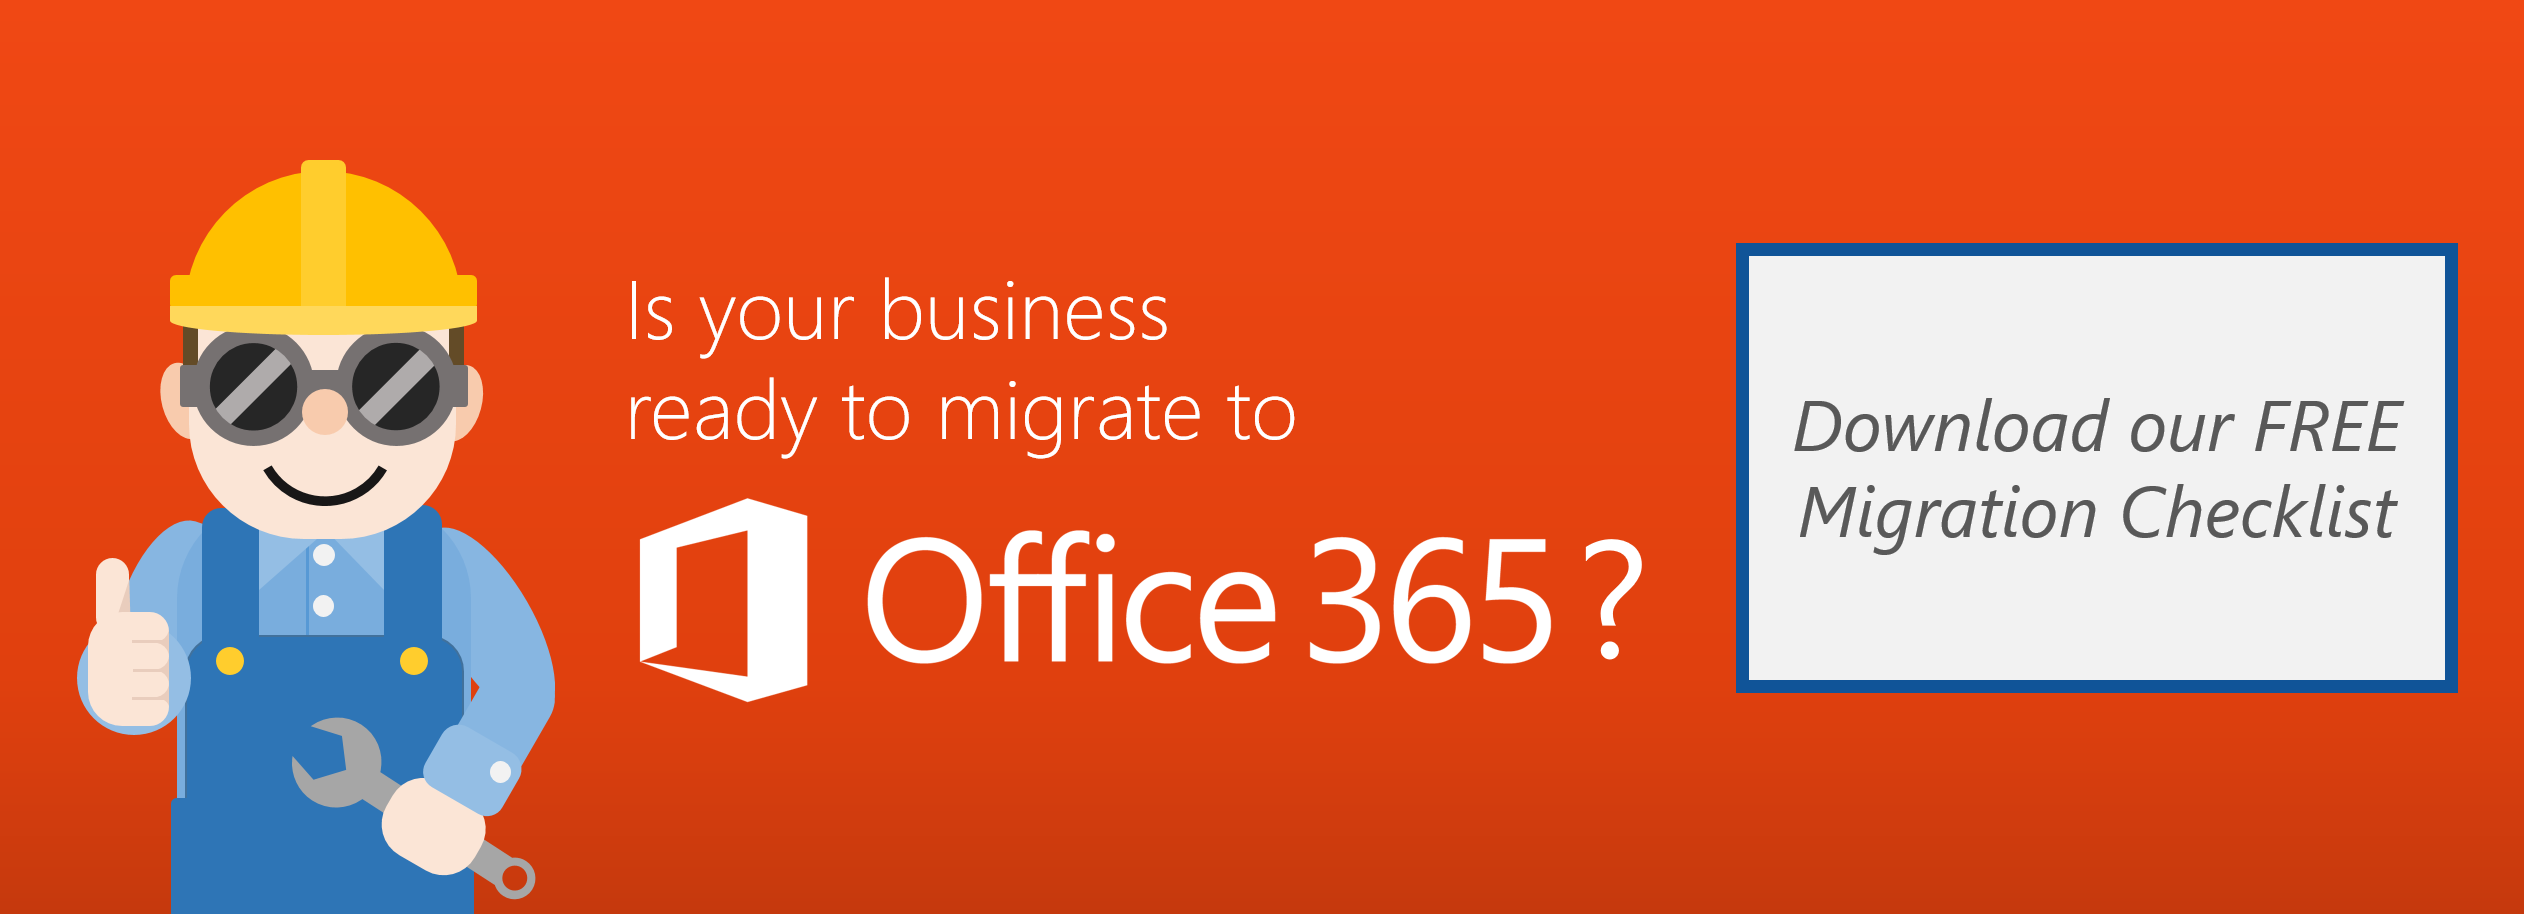 Office 365 Migration Preparedness Checklist